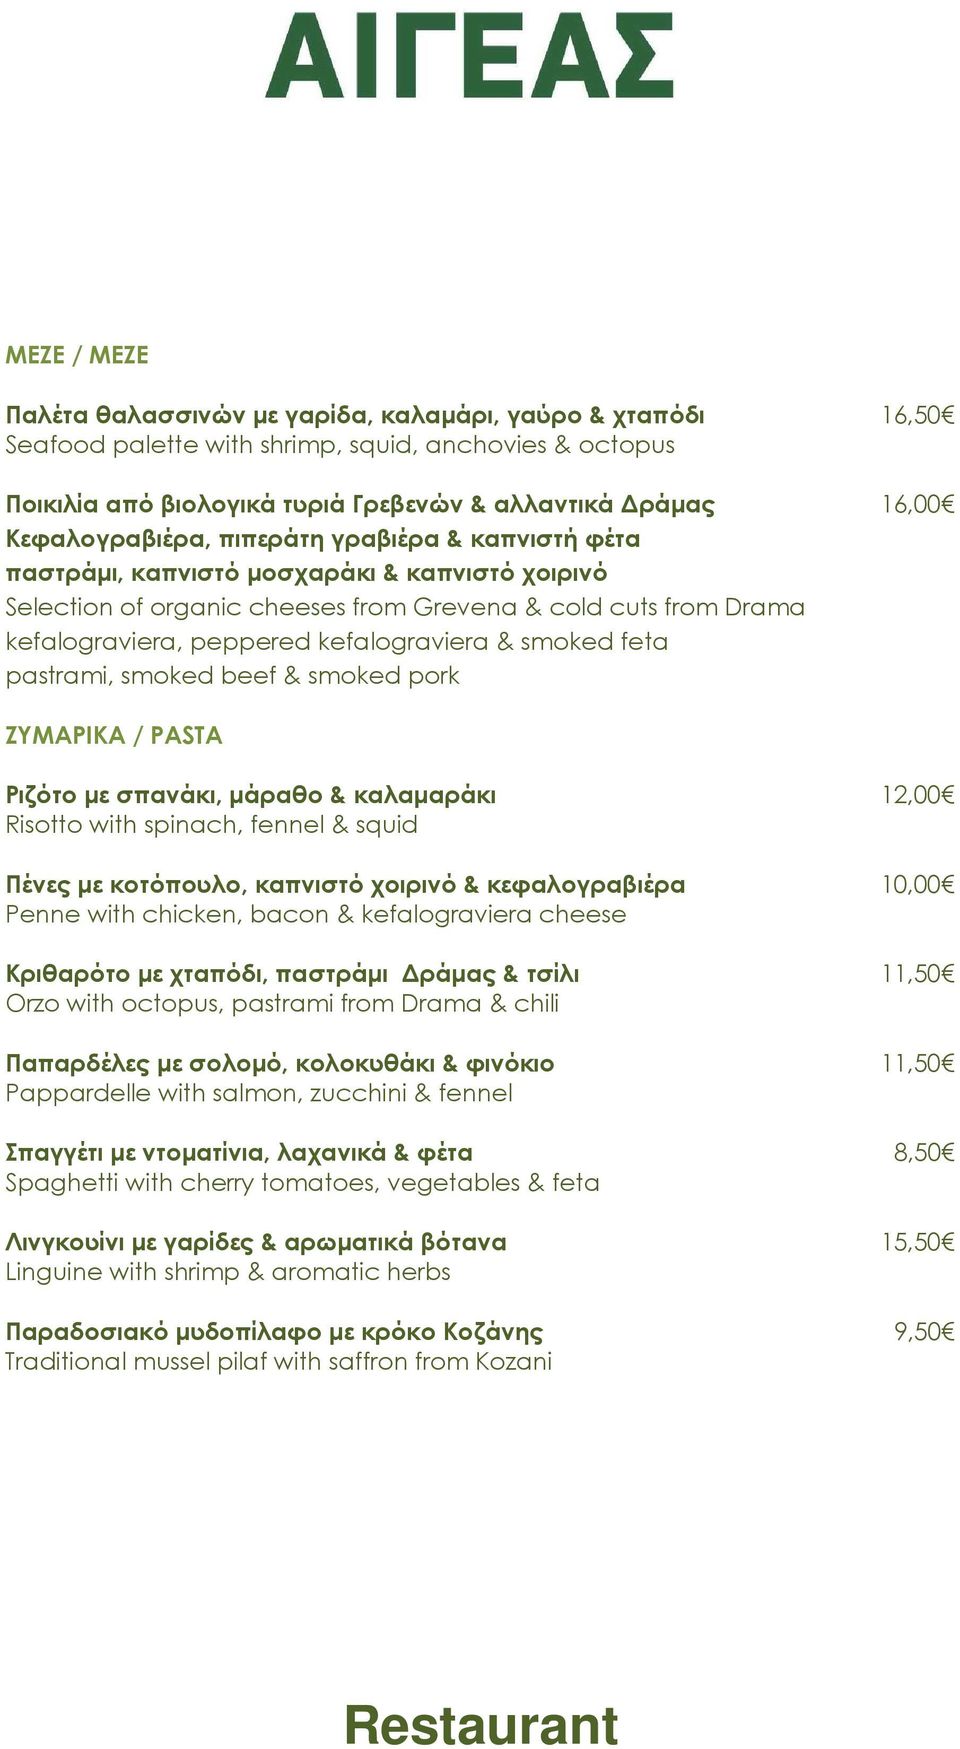 kefalograviera & smoked feta pastrami, smoked beef & smoked pork ΖΥΜΑΡΙΚΑ / PASTA Ριζότο µε σπανάκι, µάραθο & καλαµαράκι 12,00 Risotto with spinach, fennel & squid Πένες µε κοτόπουλο, καπνιστό